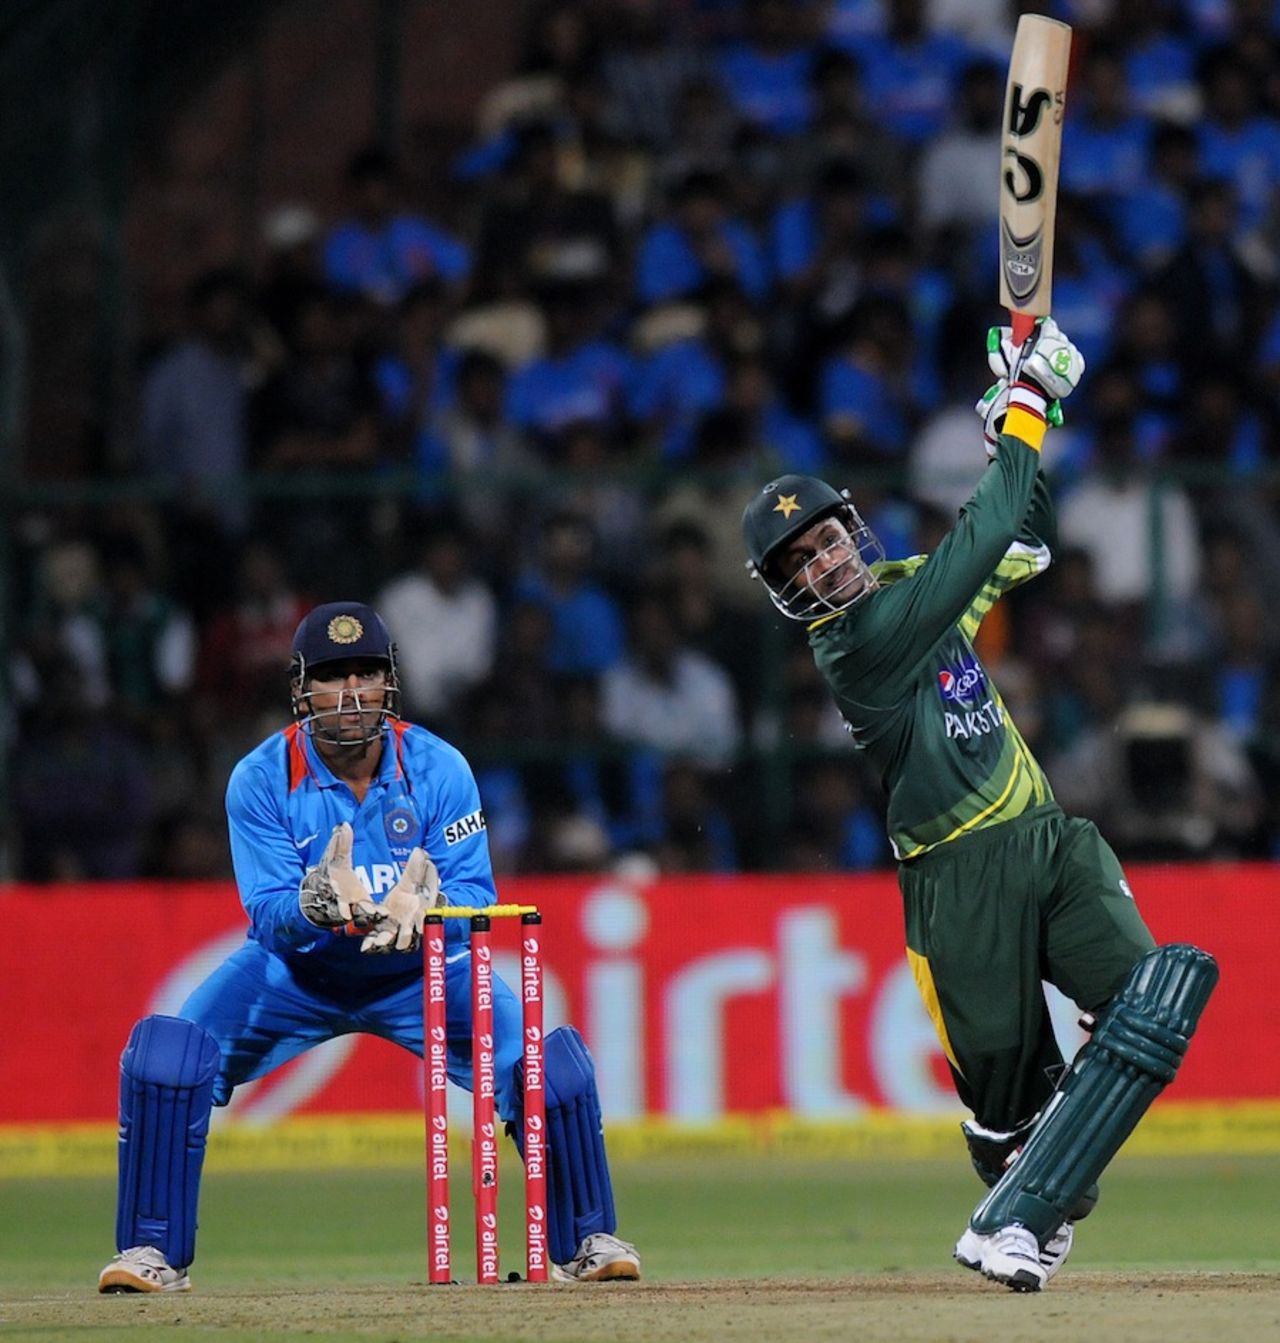 Shoaib Malik powers one down the ground, India v Pakistan, 1st T20, Bangalore, December 25, 2012